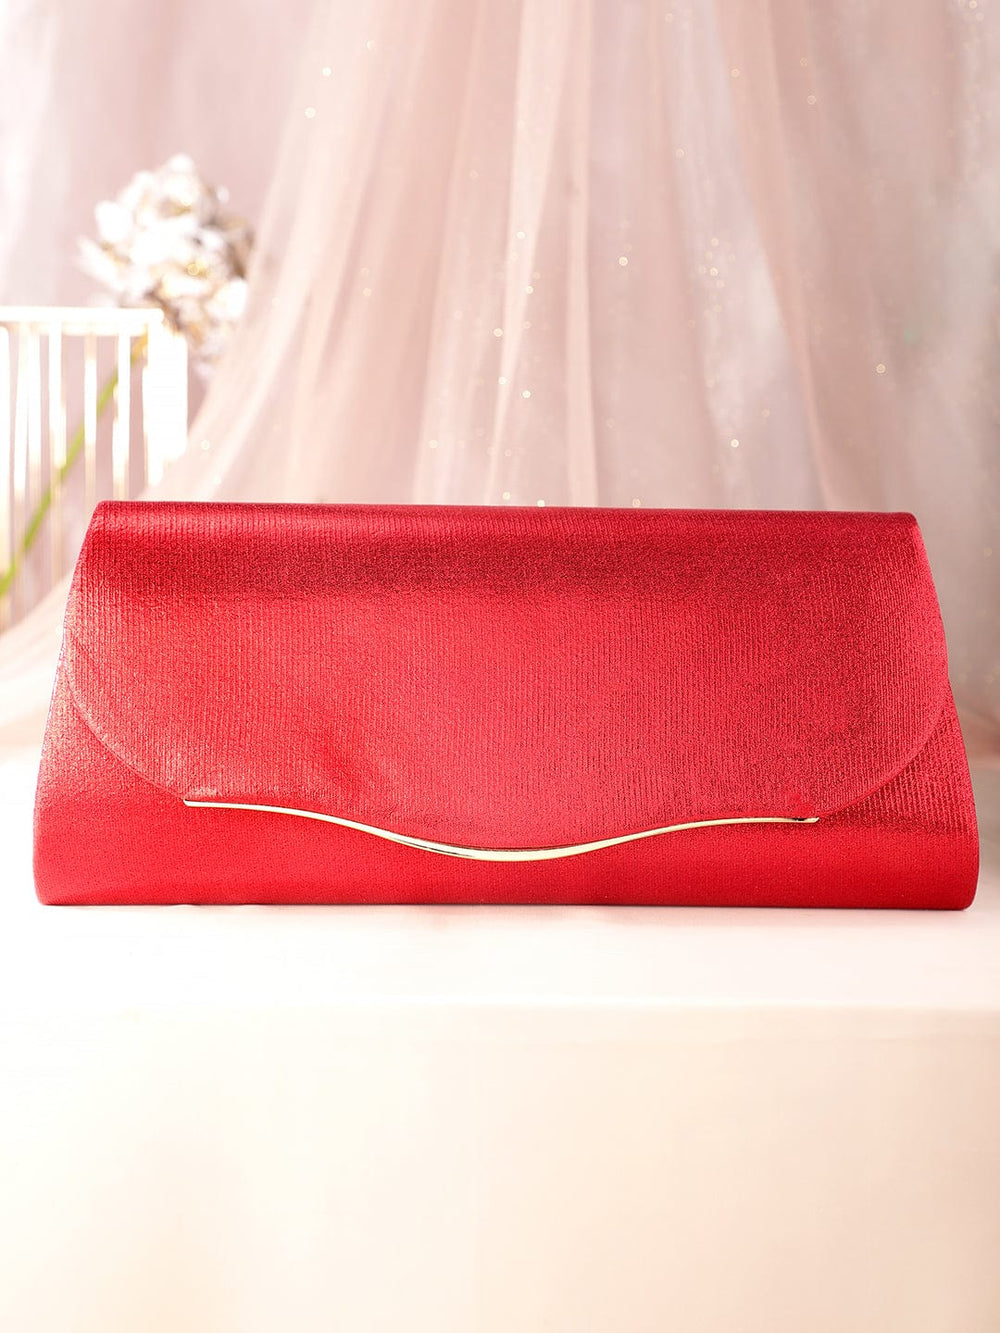 Rubans Fiery Opulence Red Textured Glossy Clutch Bag Handbag, Wallet Accessories & Clutches